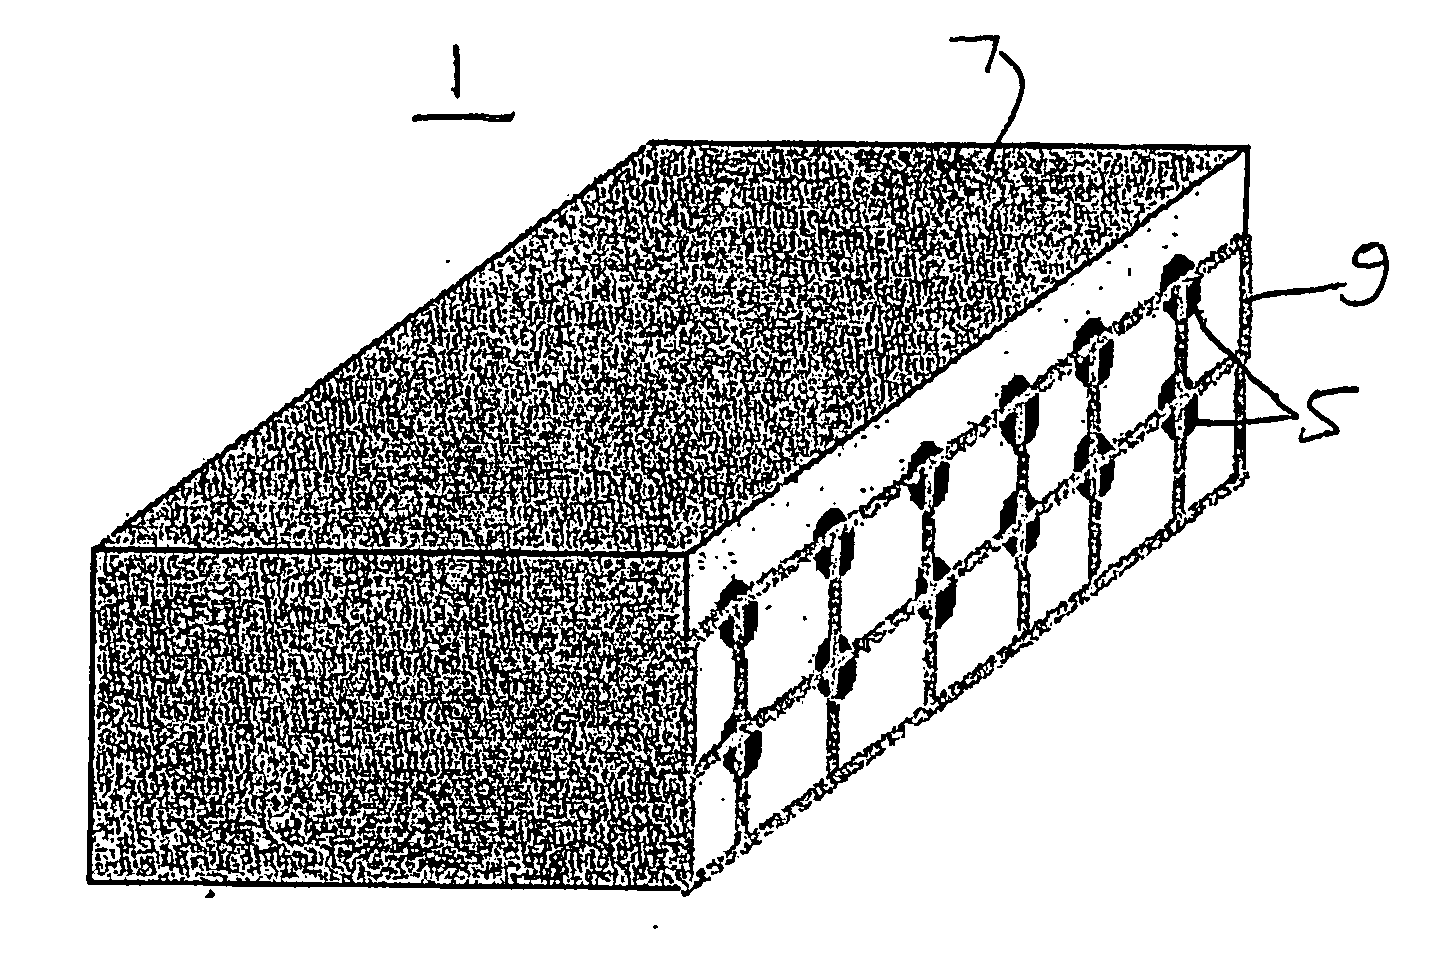 Embedded nanotube array sensor and method of making a nanotube polymer composite